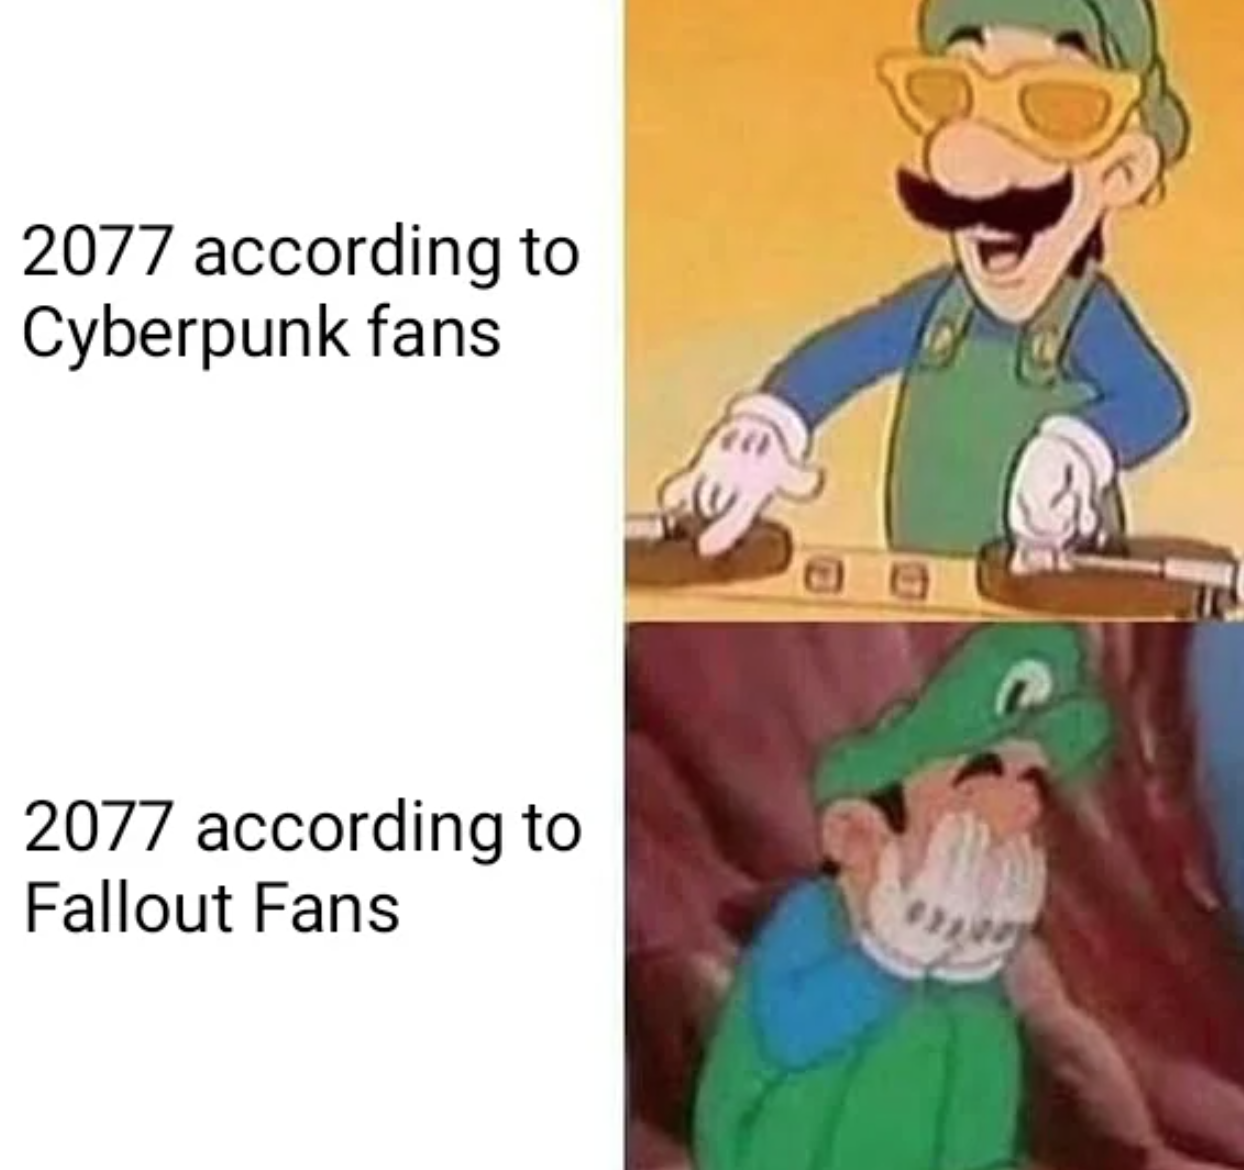 luigi dj - 2077 according to Cyberpunk fans 2077 according to Fallout Fans